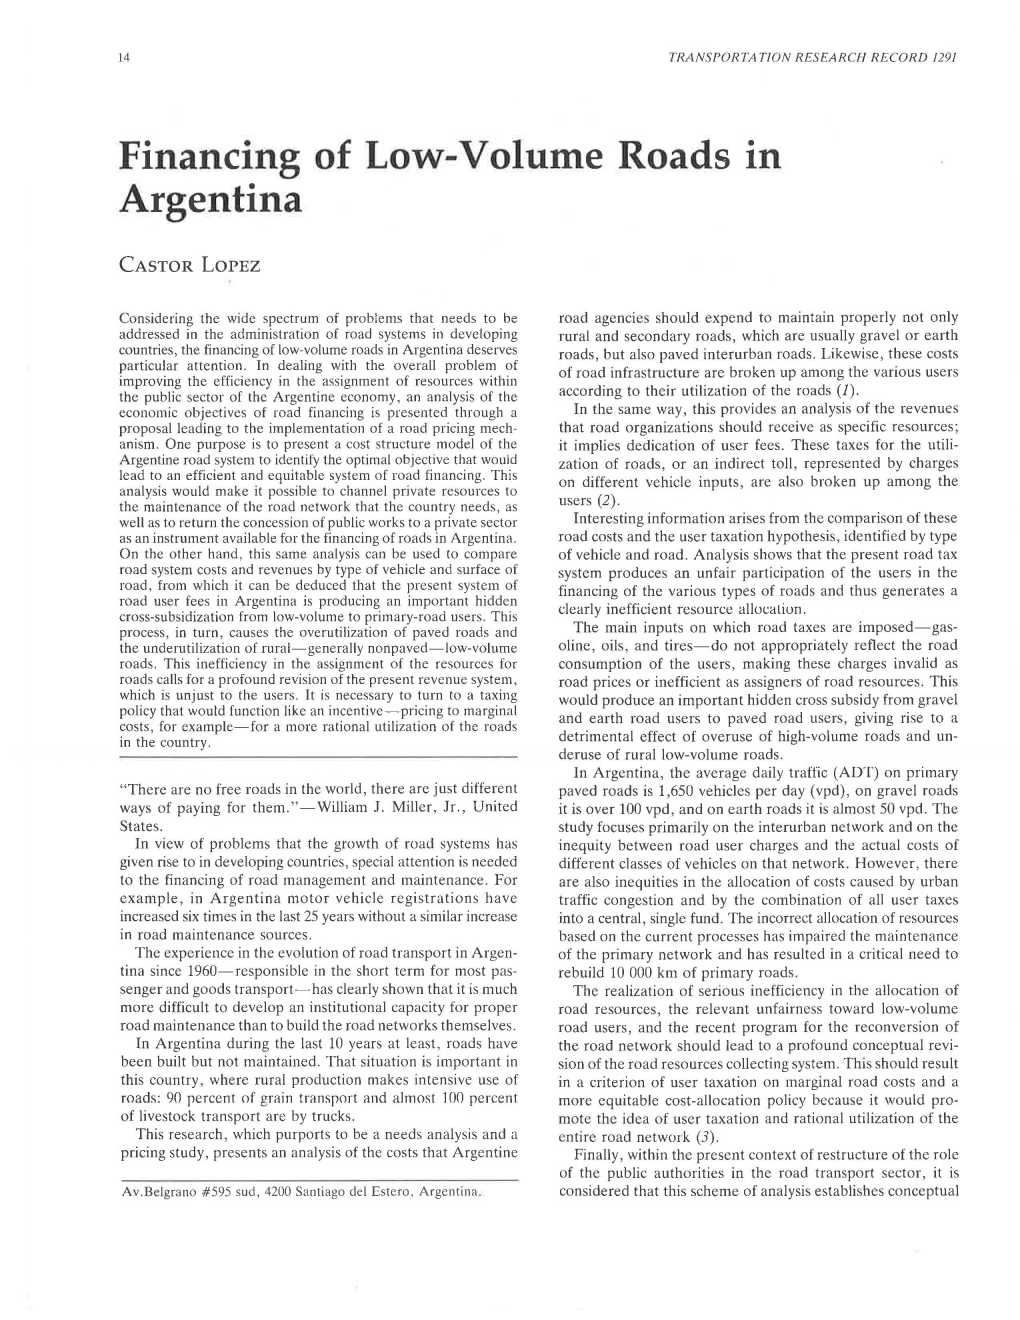 Financing of Low-Volume Roads in Argentina